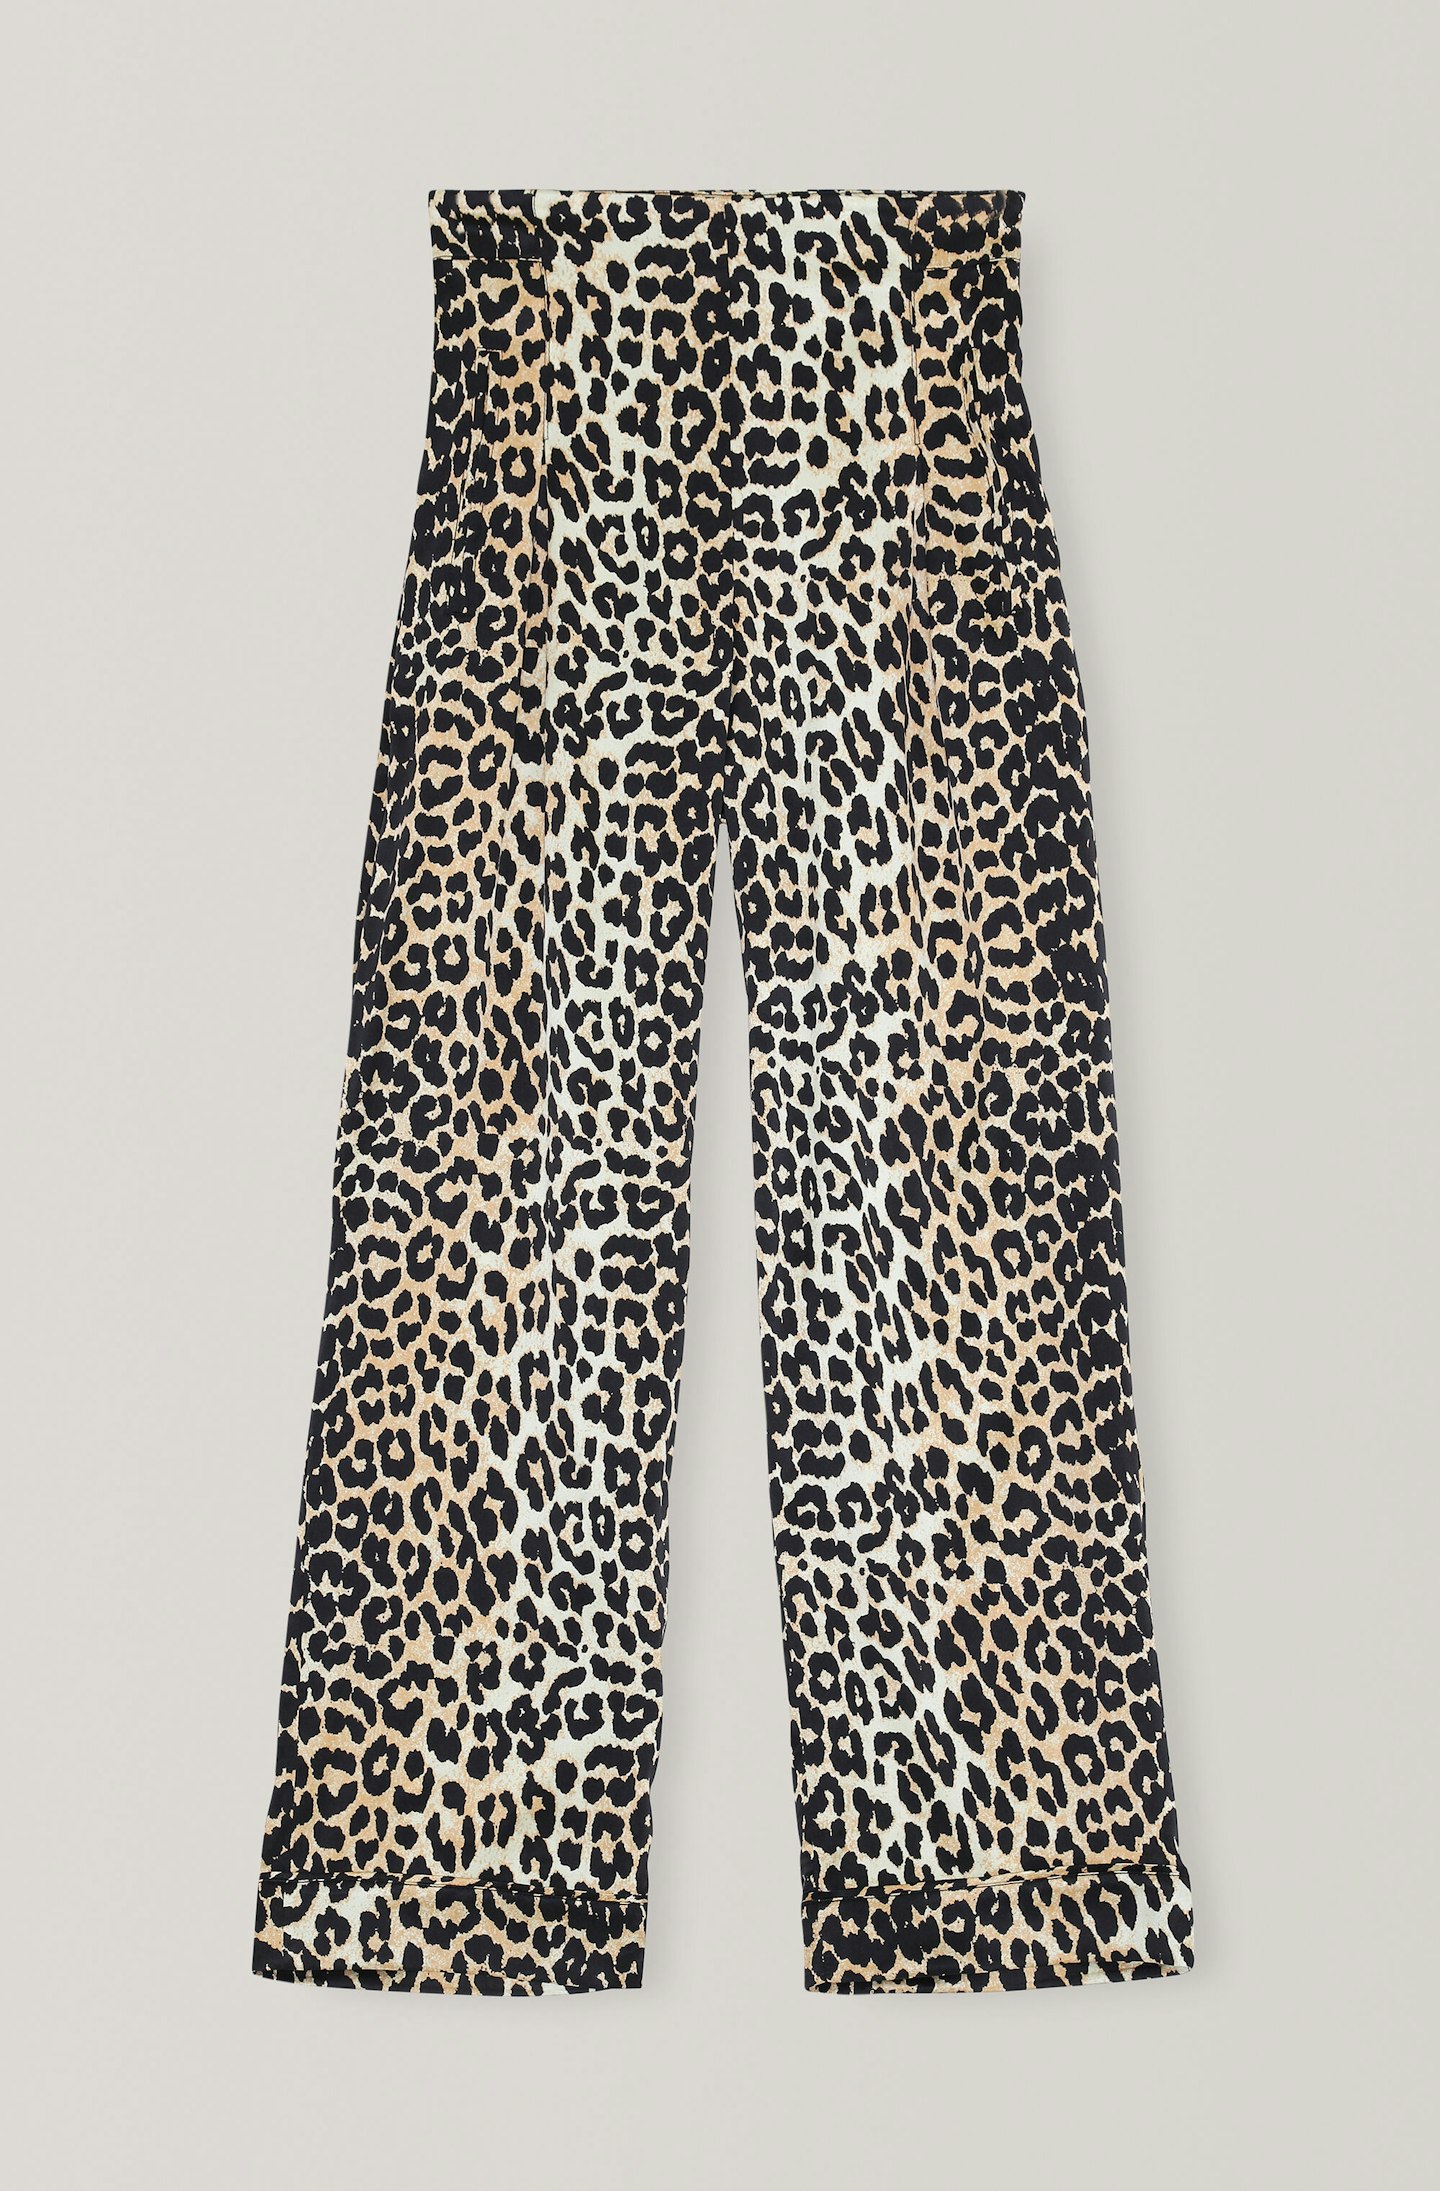 Leopard Trousers, £280, Ganni